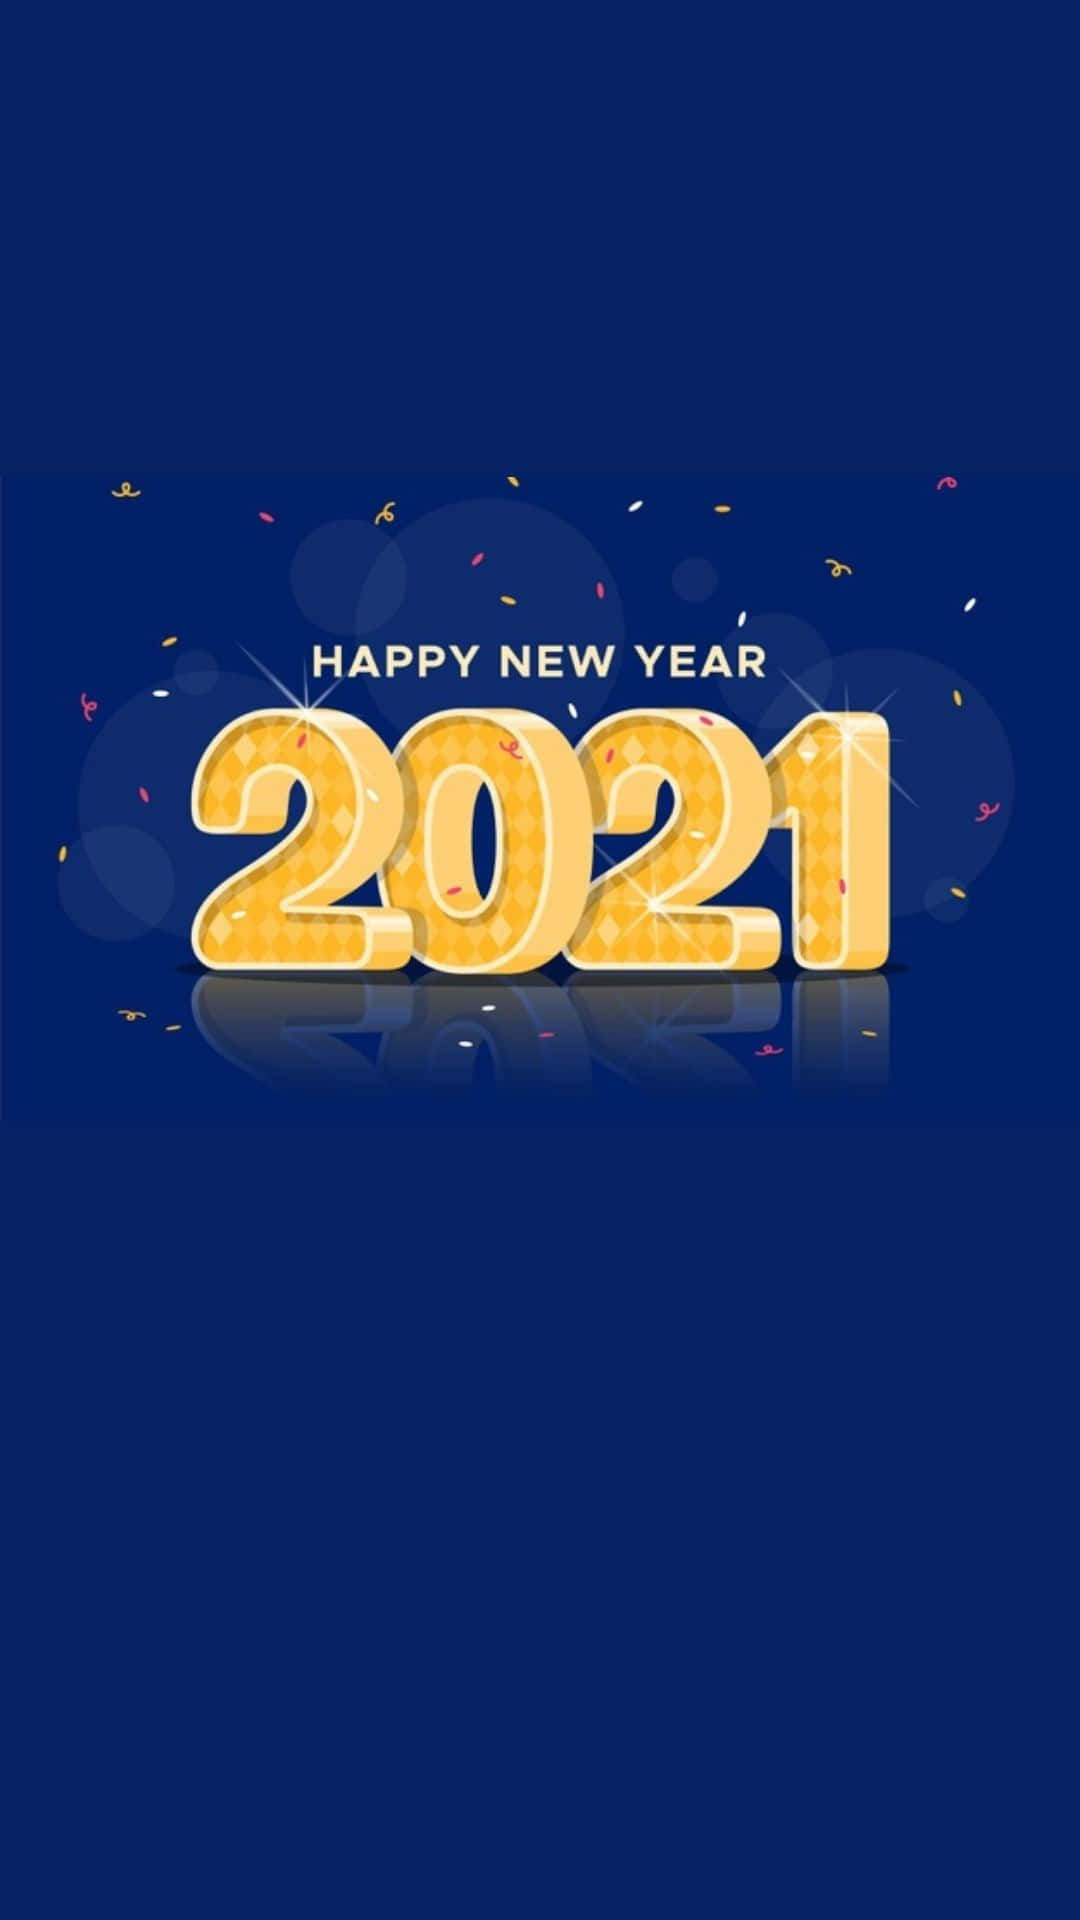 2021 Happy New Year Wallpaper